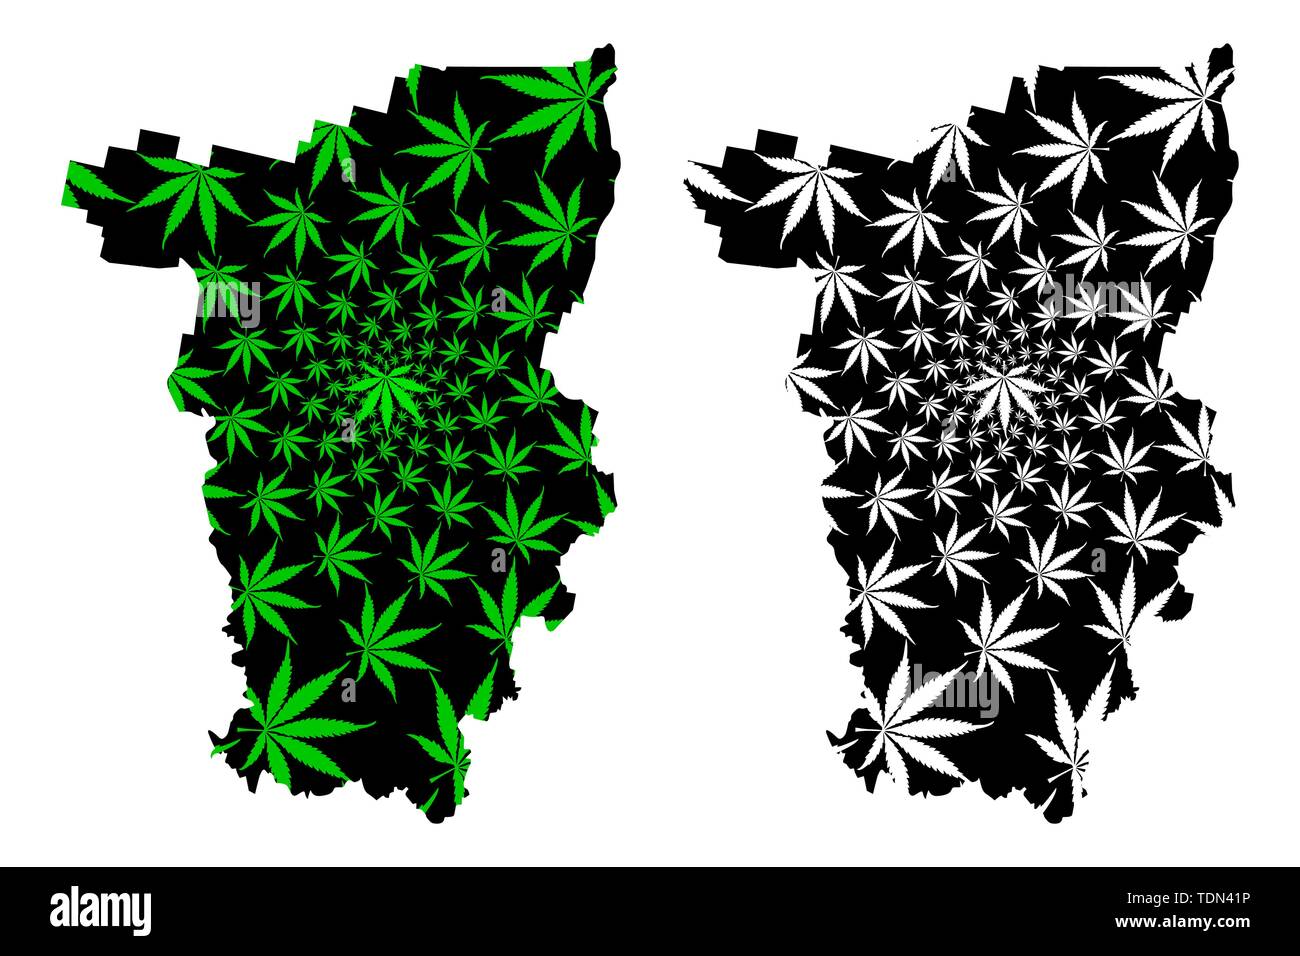 Perm Krai (Russia, Subjects of the Russian Federation, Krais of Russia) map is designed cannabis leaf green and black, Perm Krai map made of marijuana Stock Vector